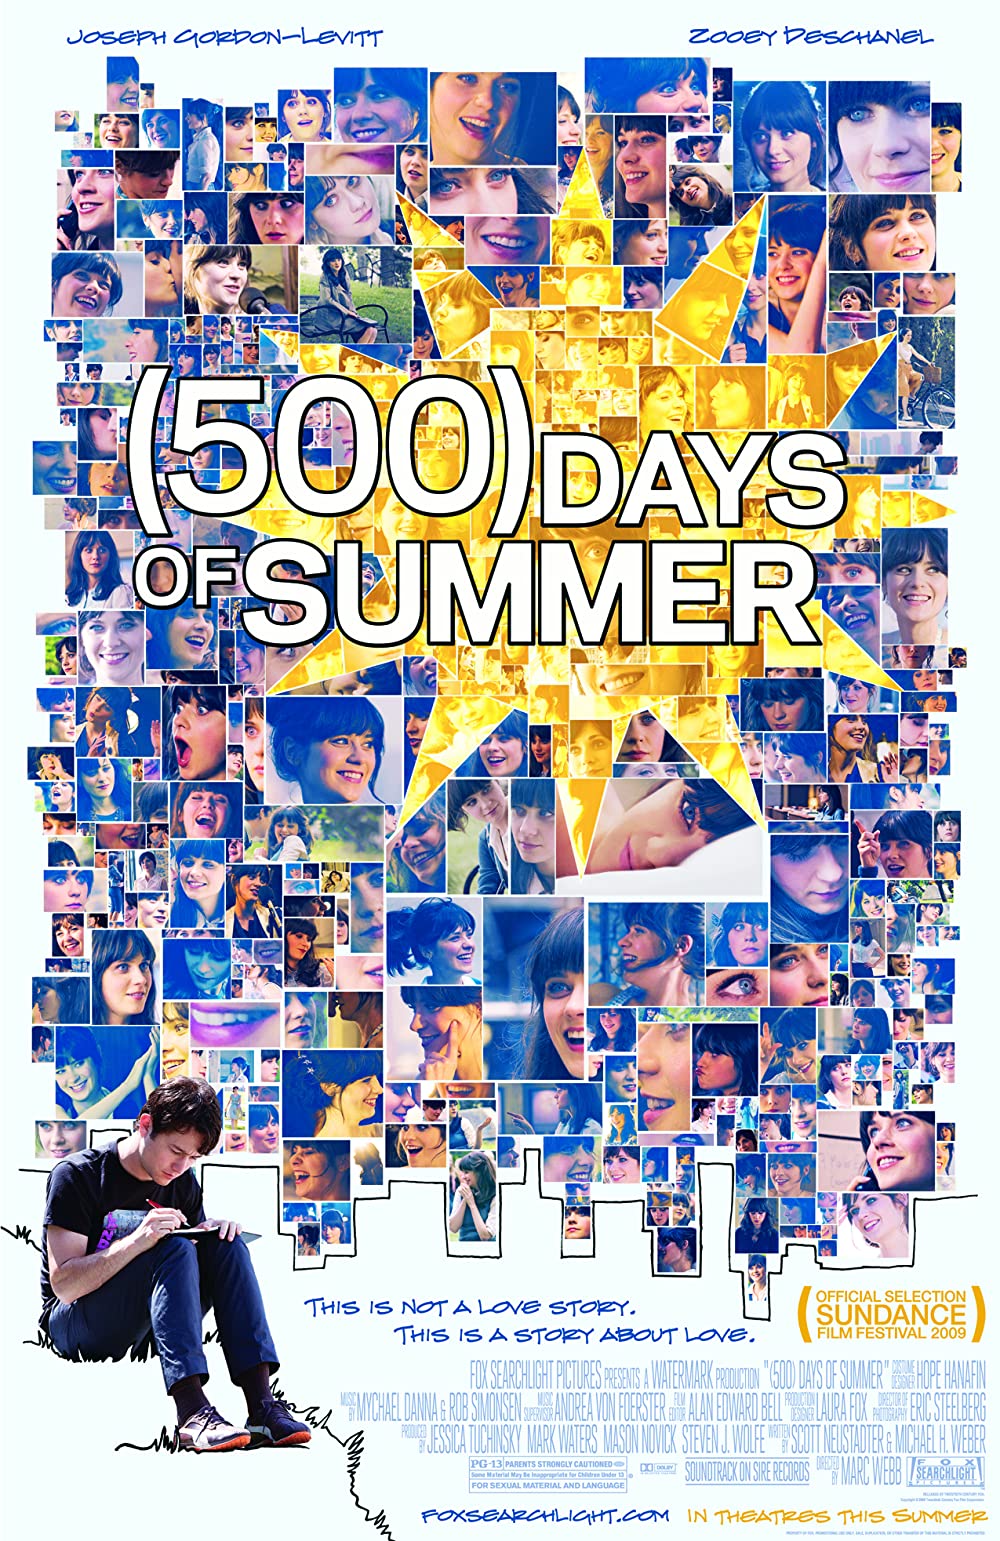 Filmbeschreibung zu 500 Days of Summer